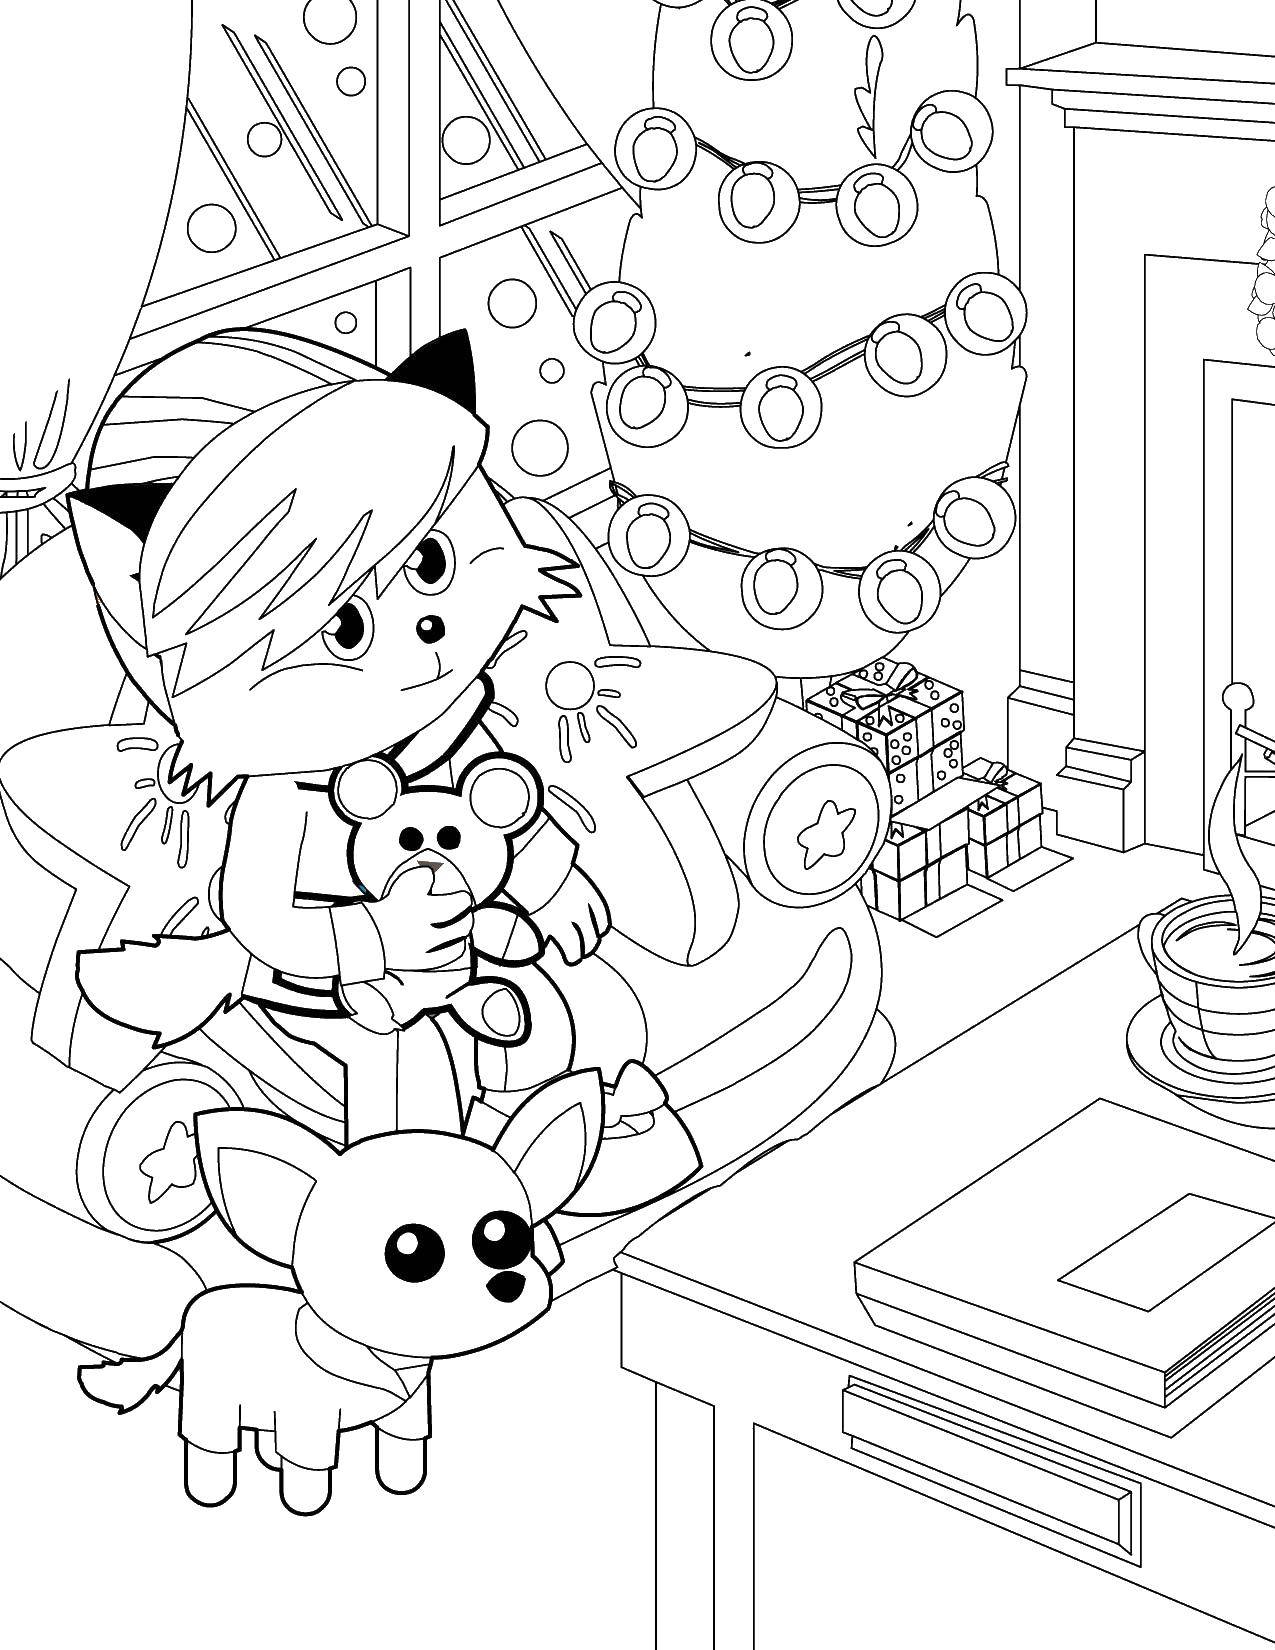 Название: Раскраска Кошечка у елки. Категория: Рождество. Теги: Рождество, елка, Новый год, кошка.